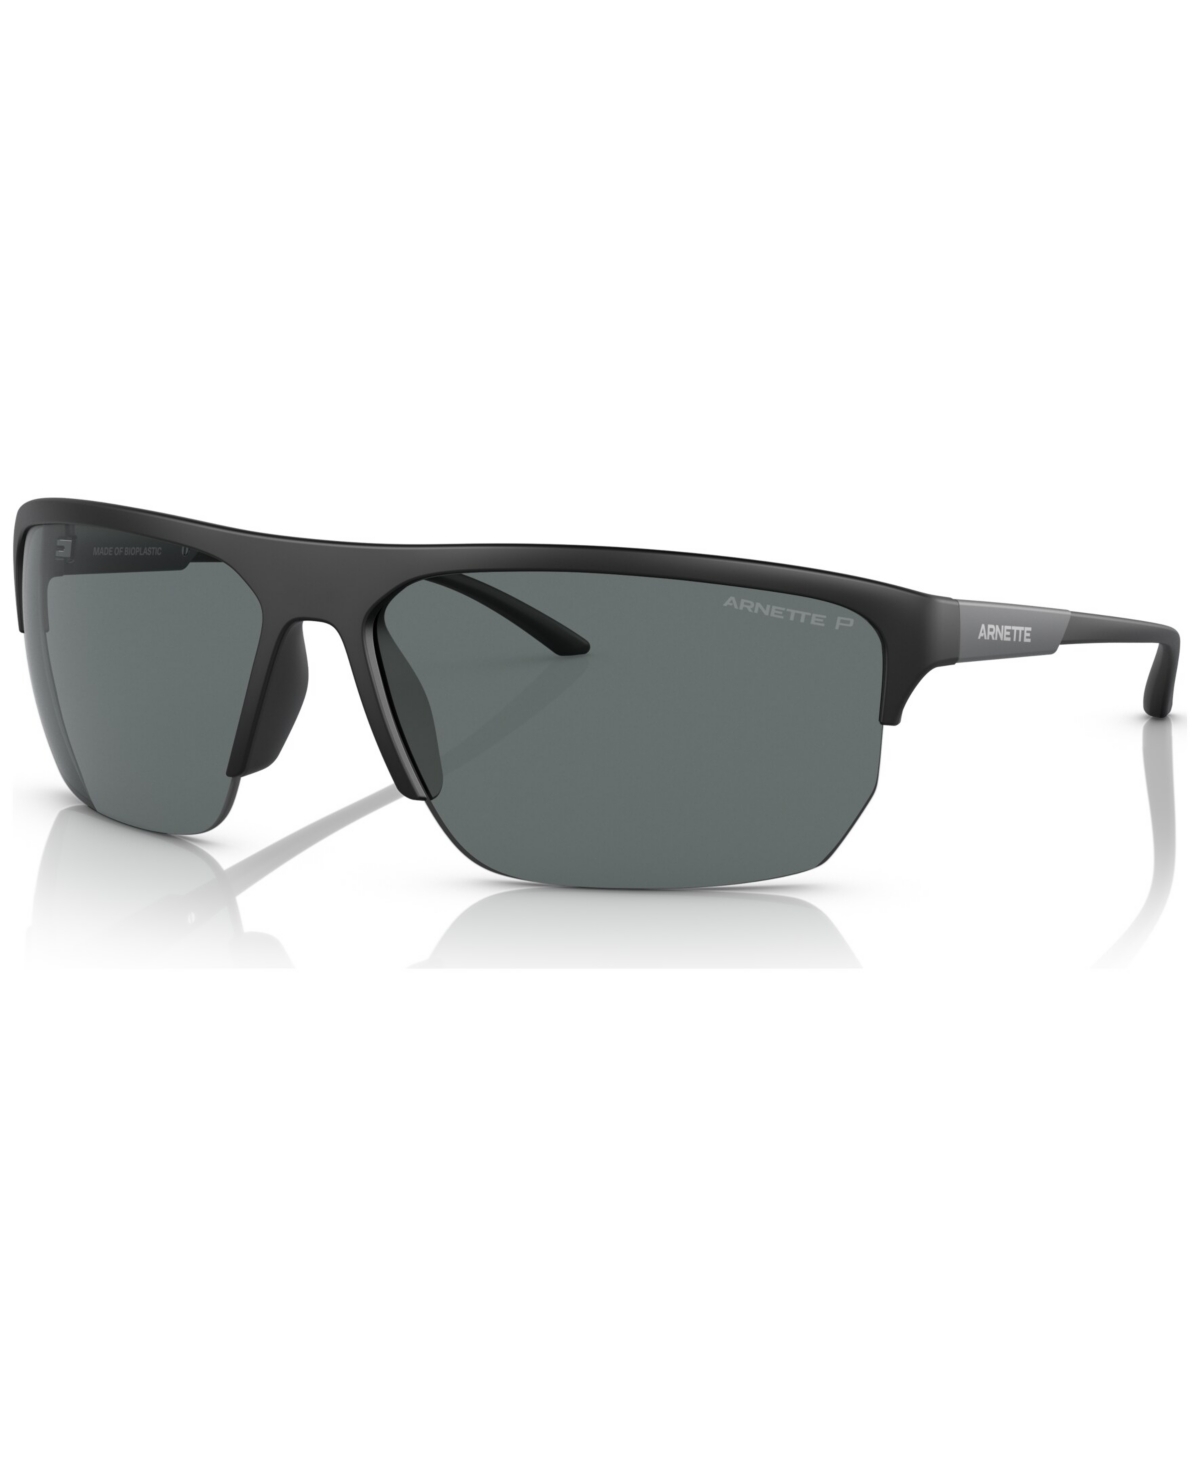 Unisex Polarized Sunglasses, AN4308 - Matte Black Gray